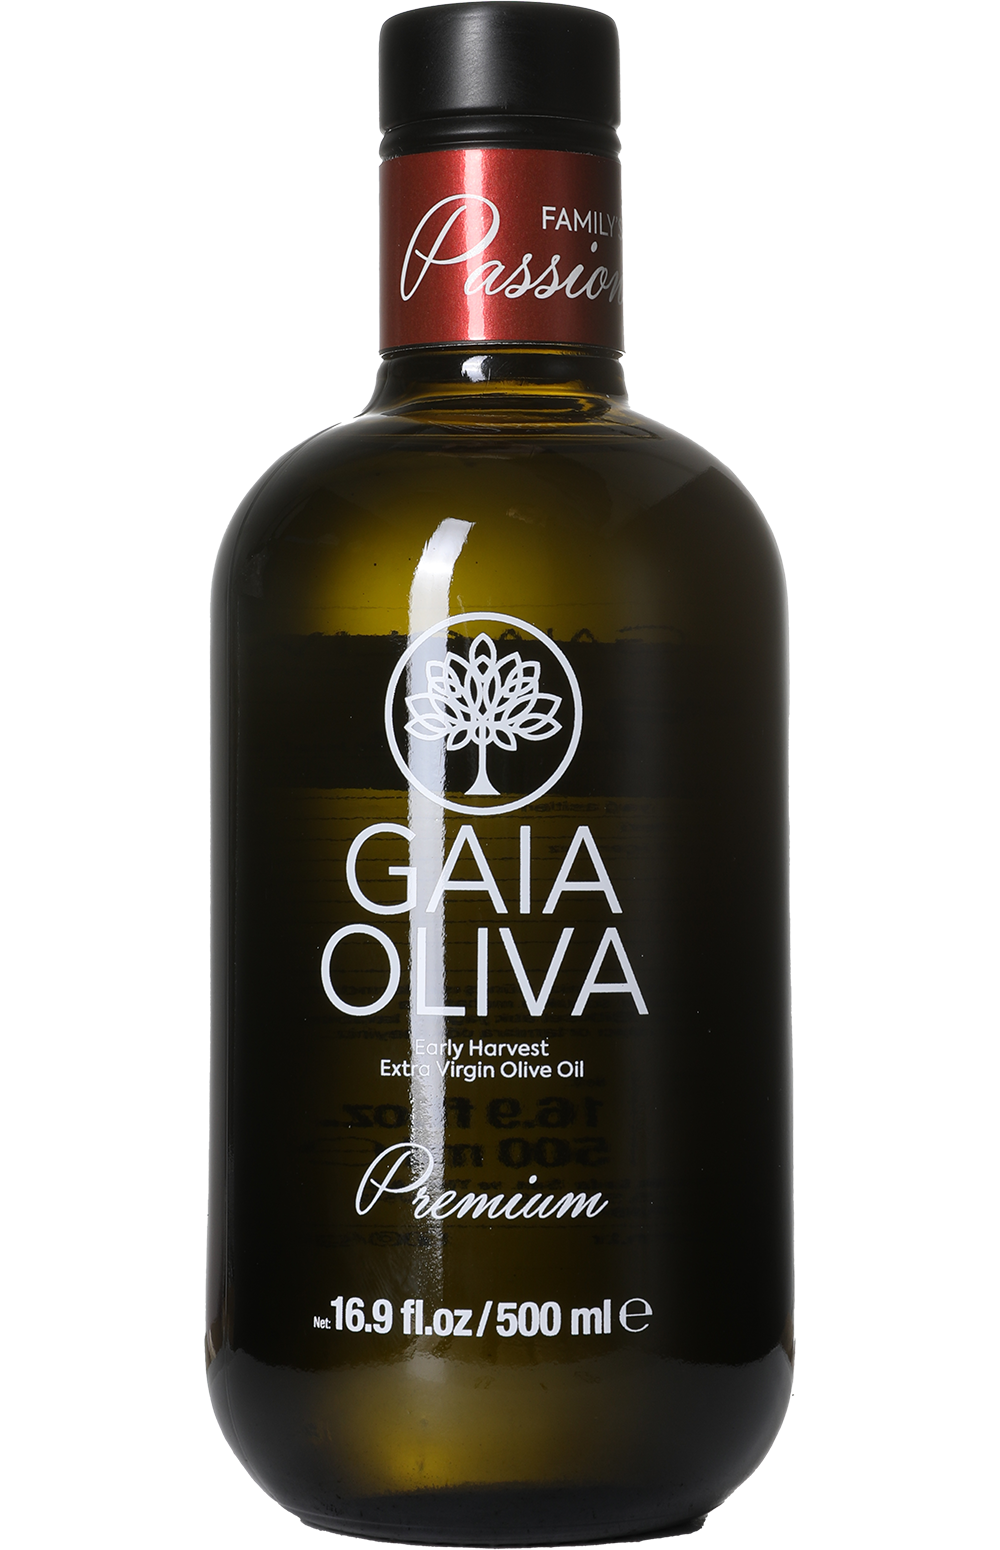 Gaia  Oliva Family’s Passion